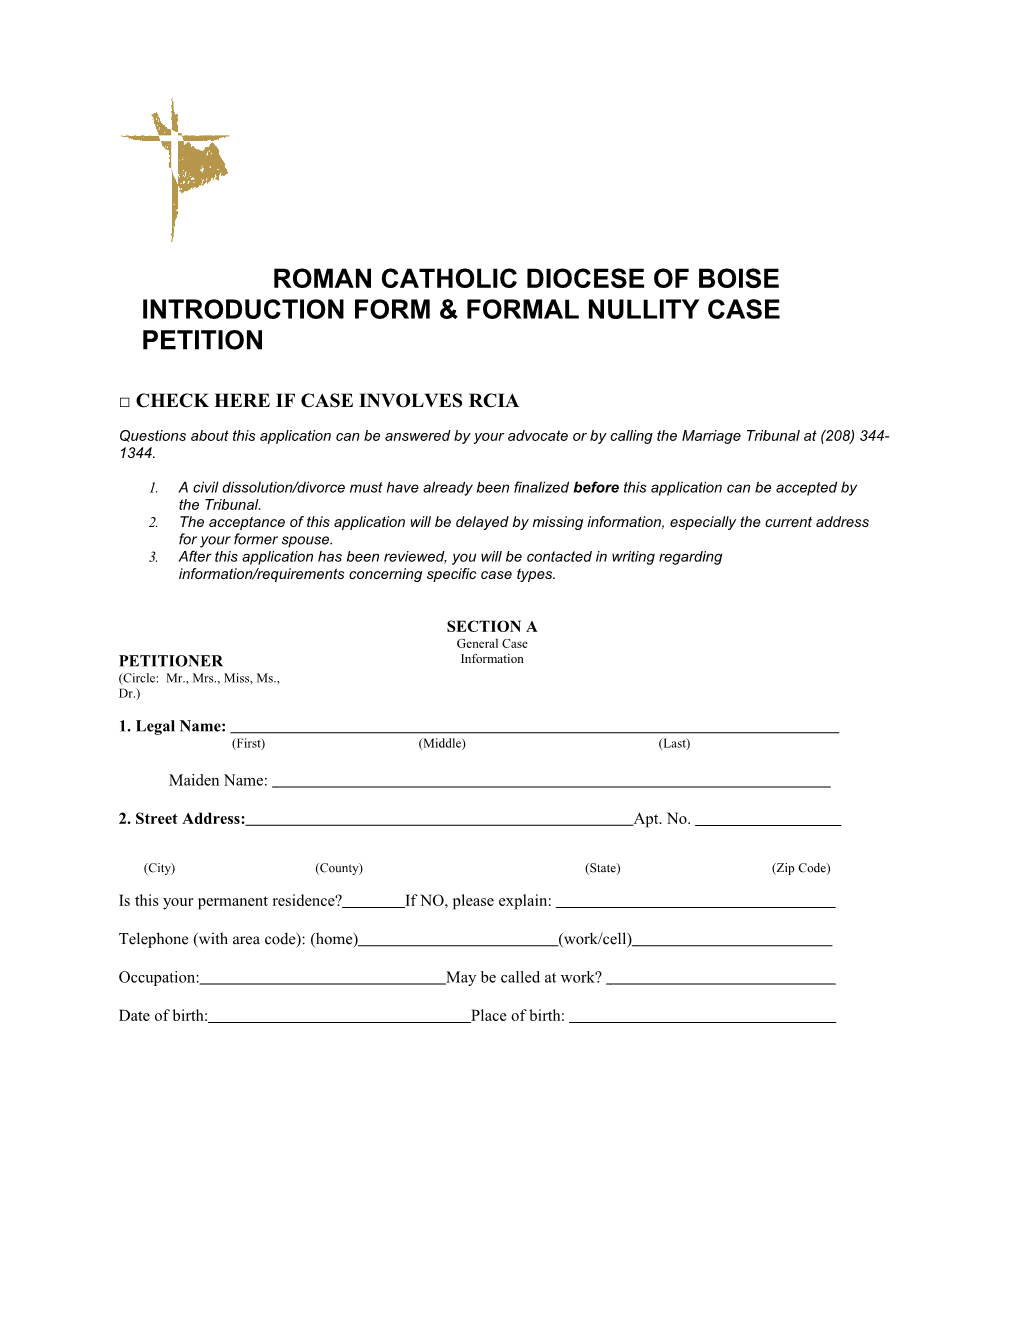 Roman Catholic Diocese of Boise